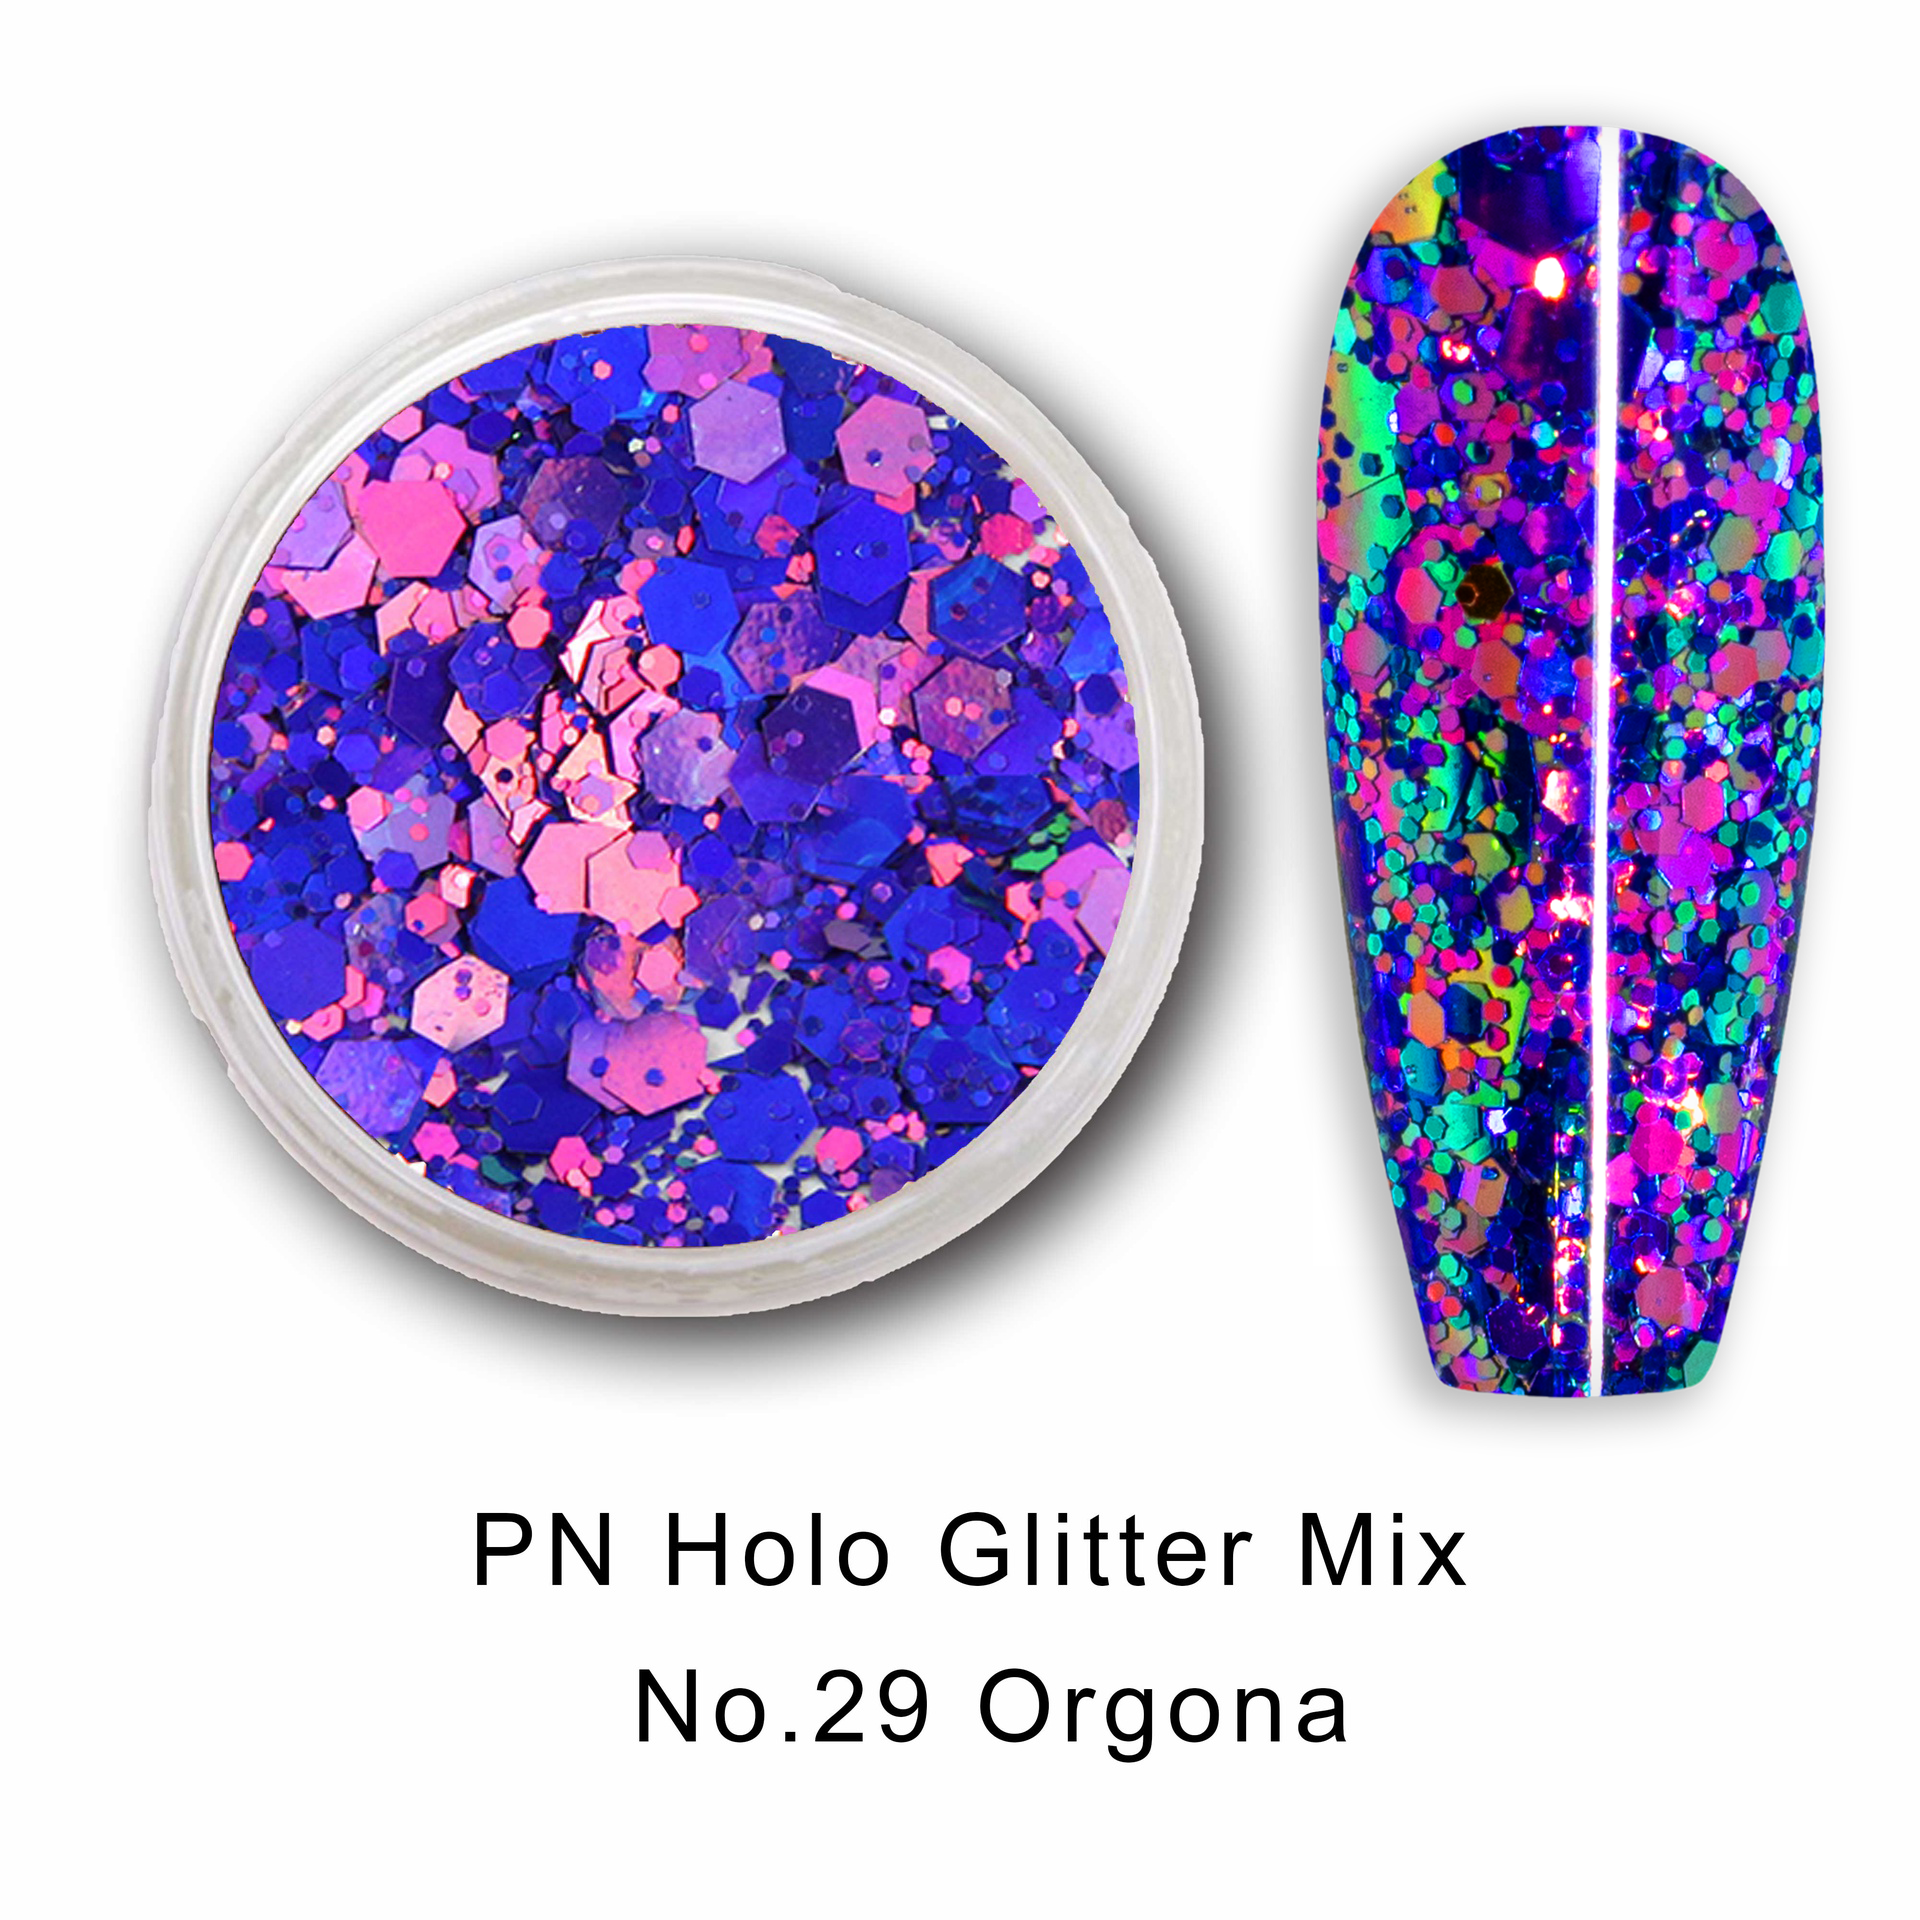 PN Holo glitter mix No.29 Orgona